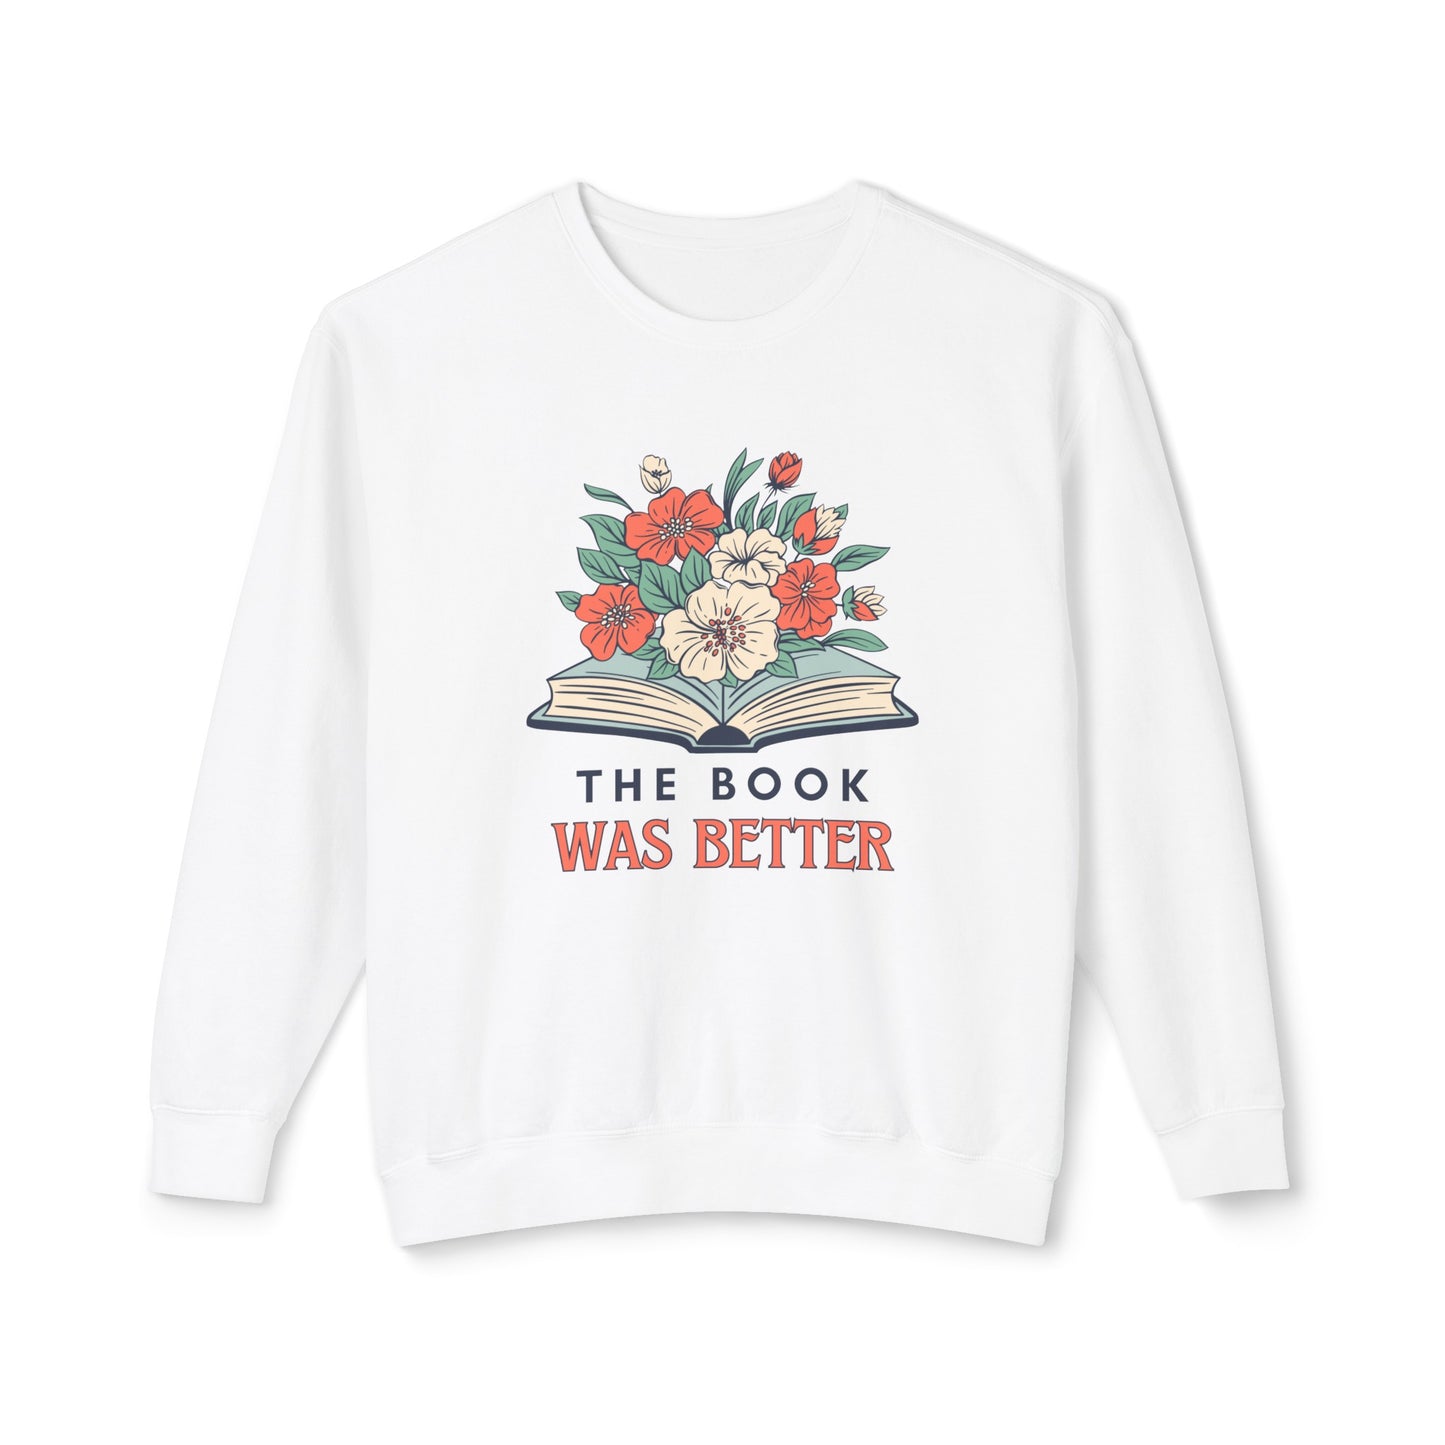 The Book Was Better Lightweight Sweatshirt - Book Lovers